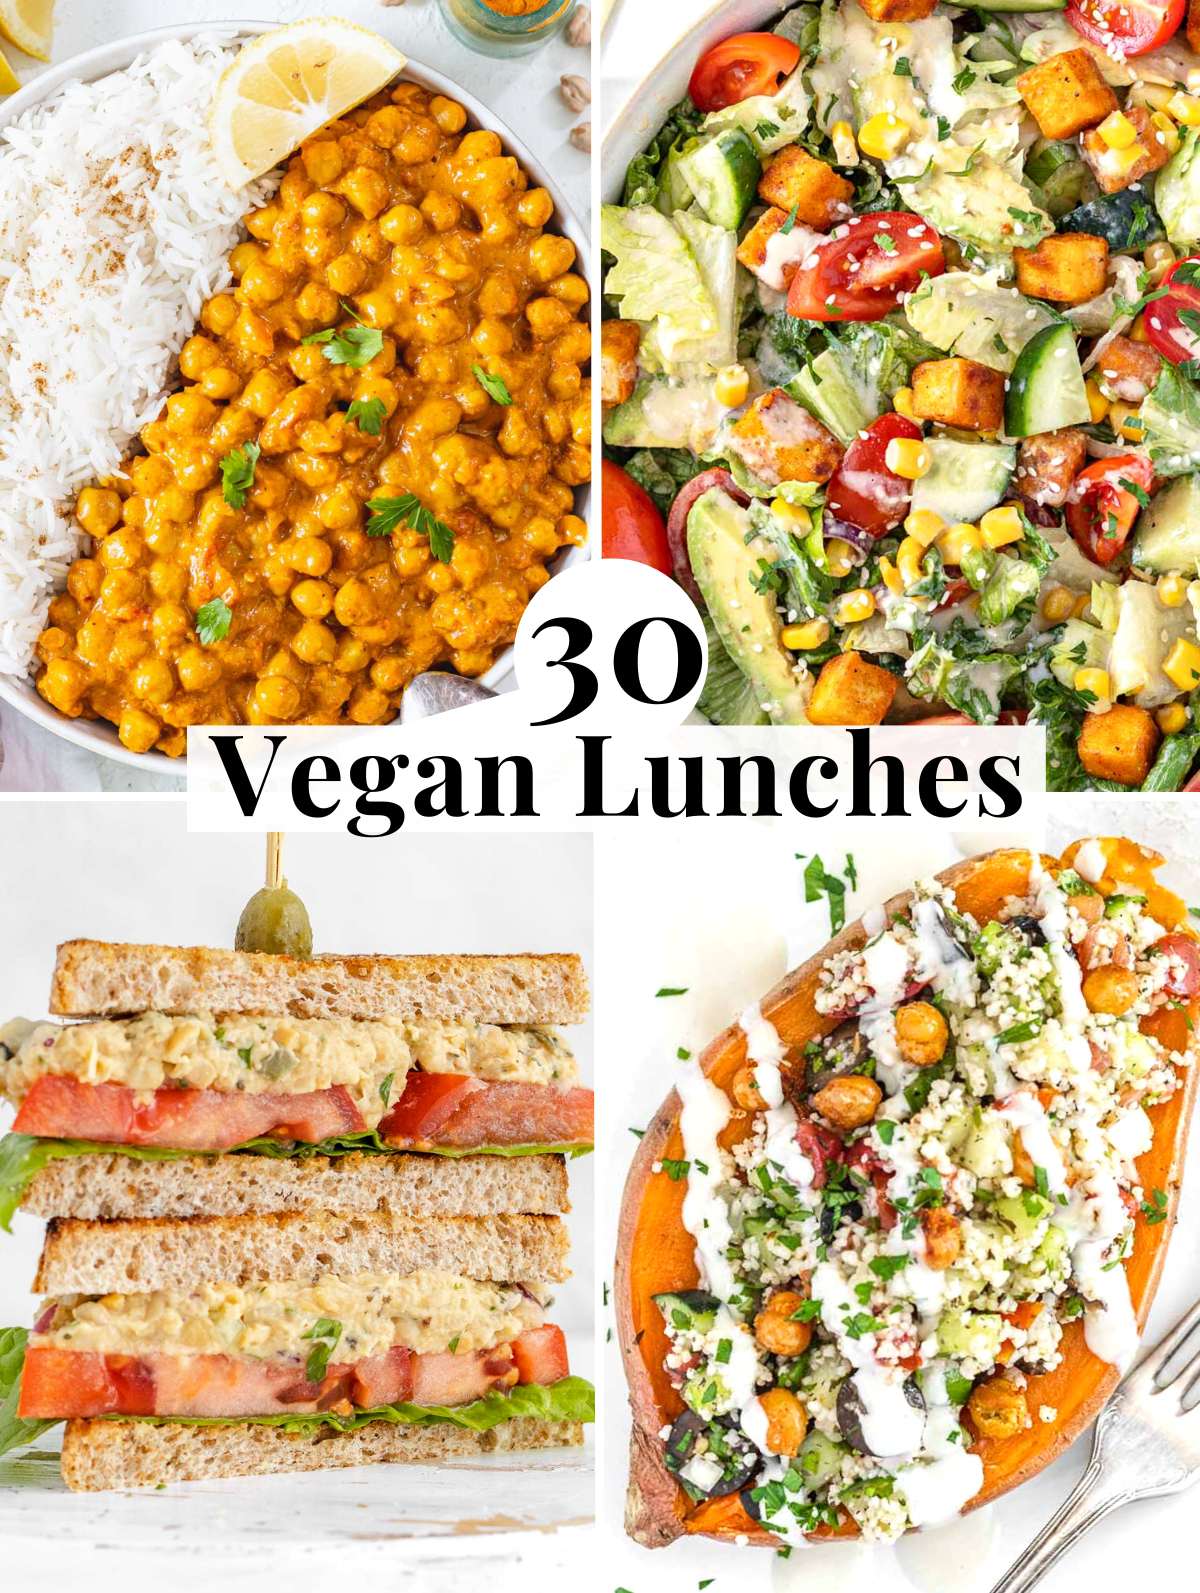 Vegan lunch ideas